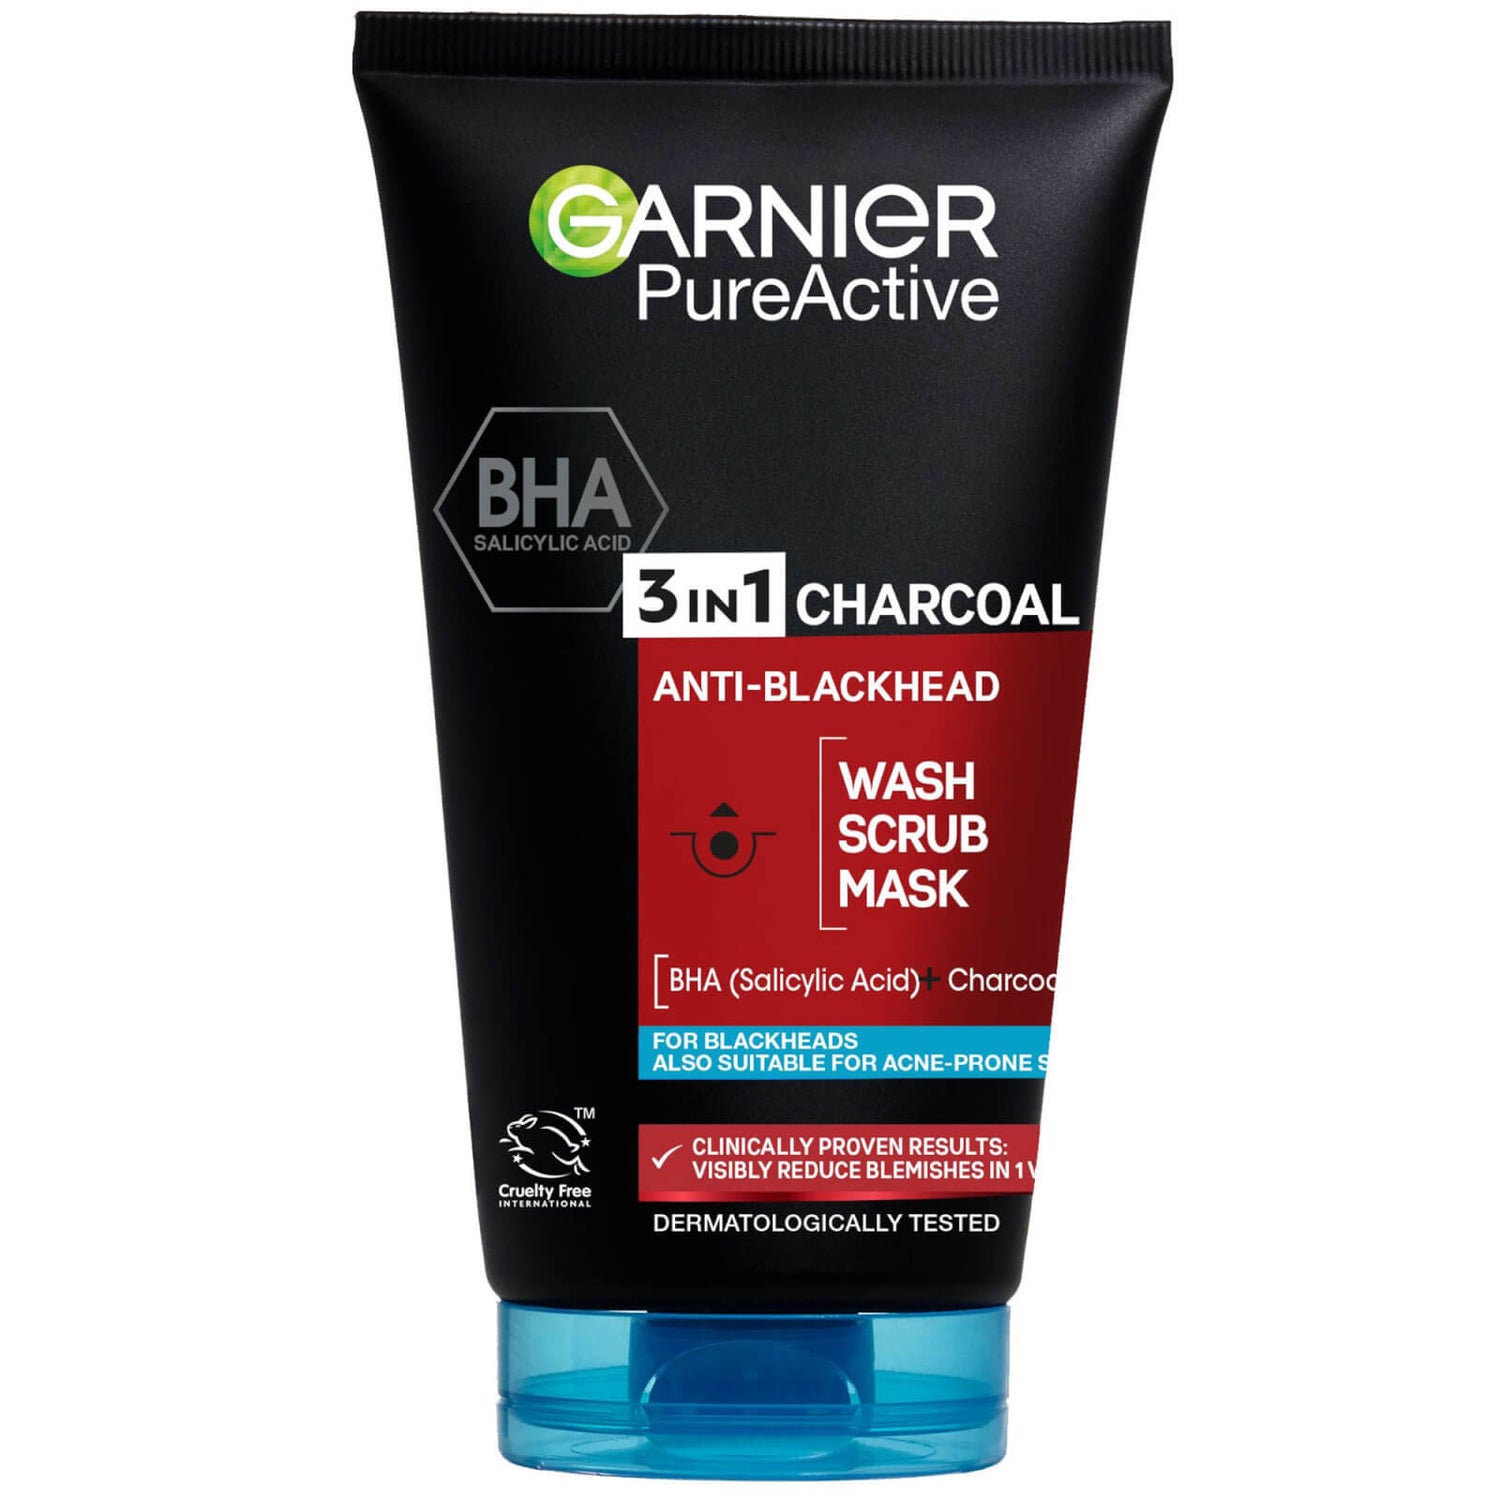 Garnier Pure Active Intensive 3 in 1 Anti-Blackhead Charcoal Wash, Scrub  and Mask 150 ml - Gratis Lieferservice weltweit